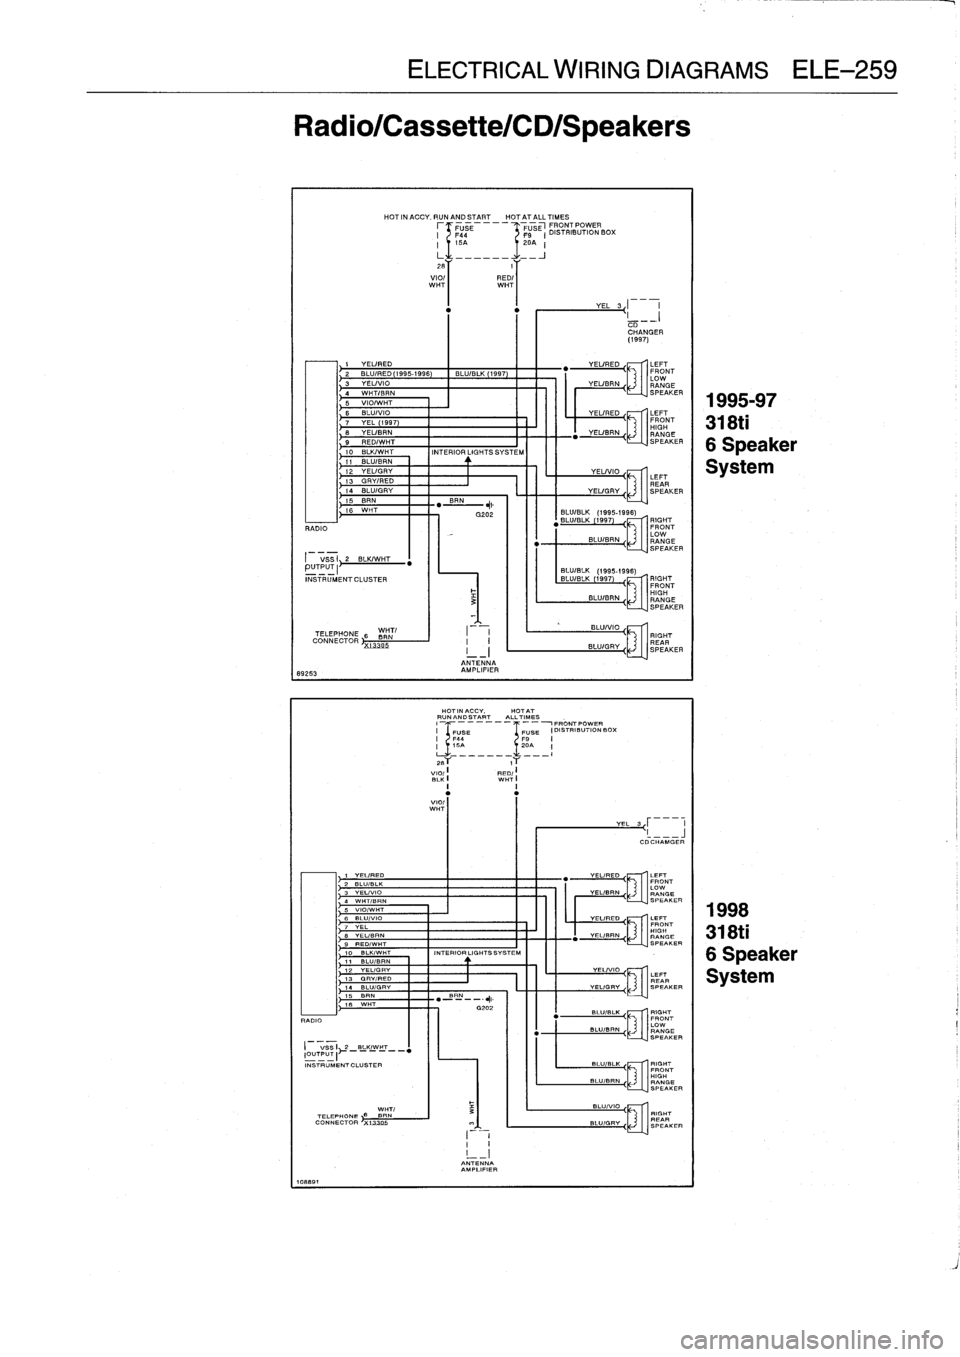 BMW 328i 1997 E36 Repair Manual 
ELECTRICAL
WIRING
DIAGRAMS
ELE-259

Radio/Cassette/CD/Speakers

RADIO

I
VSSI
2
BLK/WHT
pUTPUTI~~
INSTRUMENT
CLUSTER

89253
RADIO

I

	

V
SS
I
r
2
-
B-K-W-7
~
1=UUTPU-I
INSTRUMENTCLUSTER

1-891

1
0